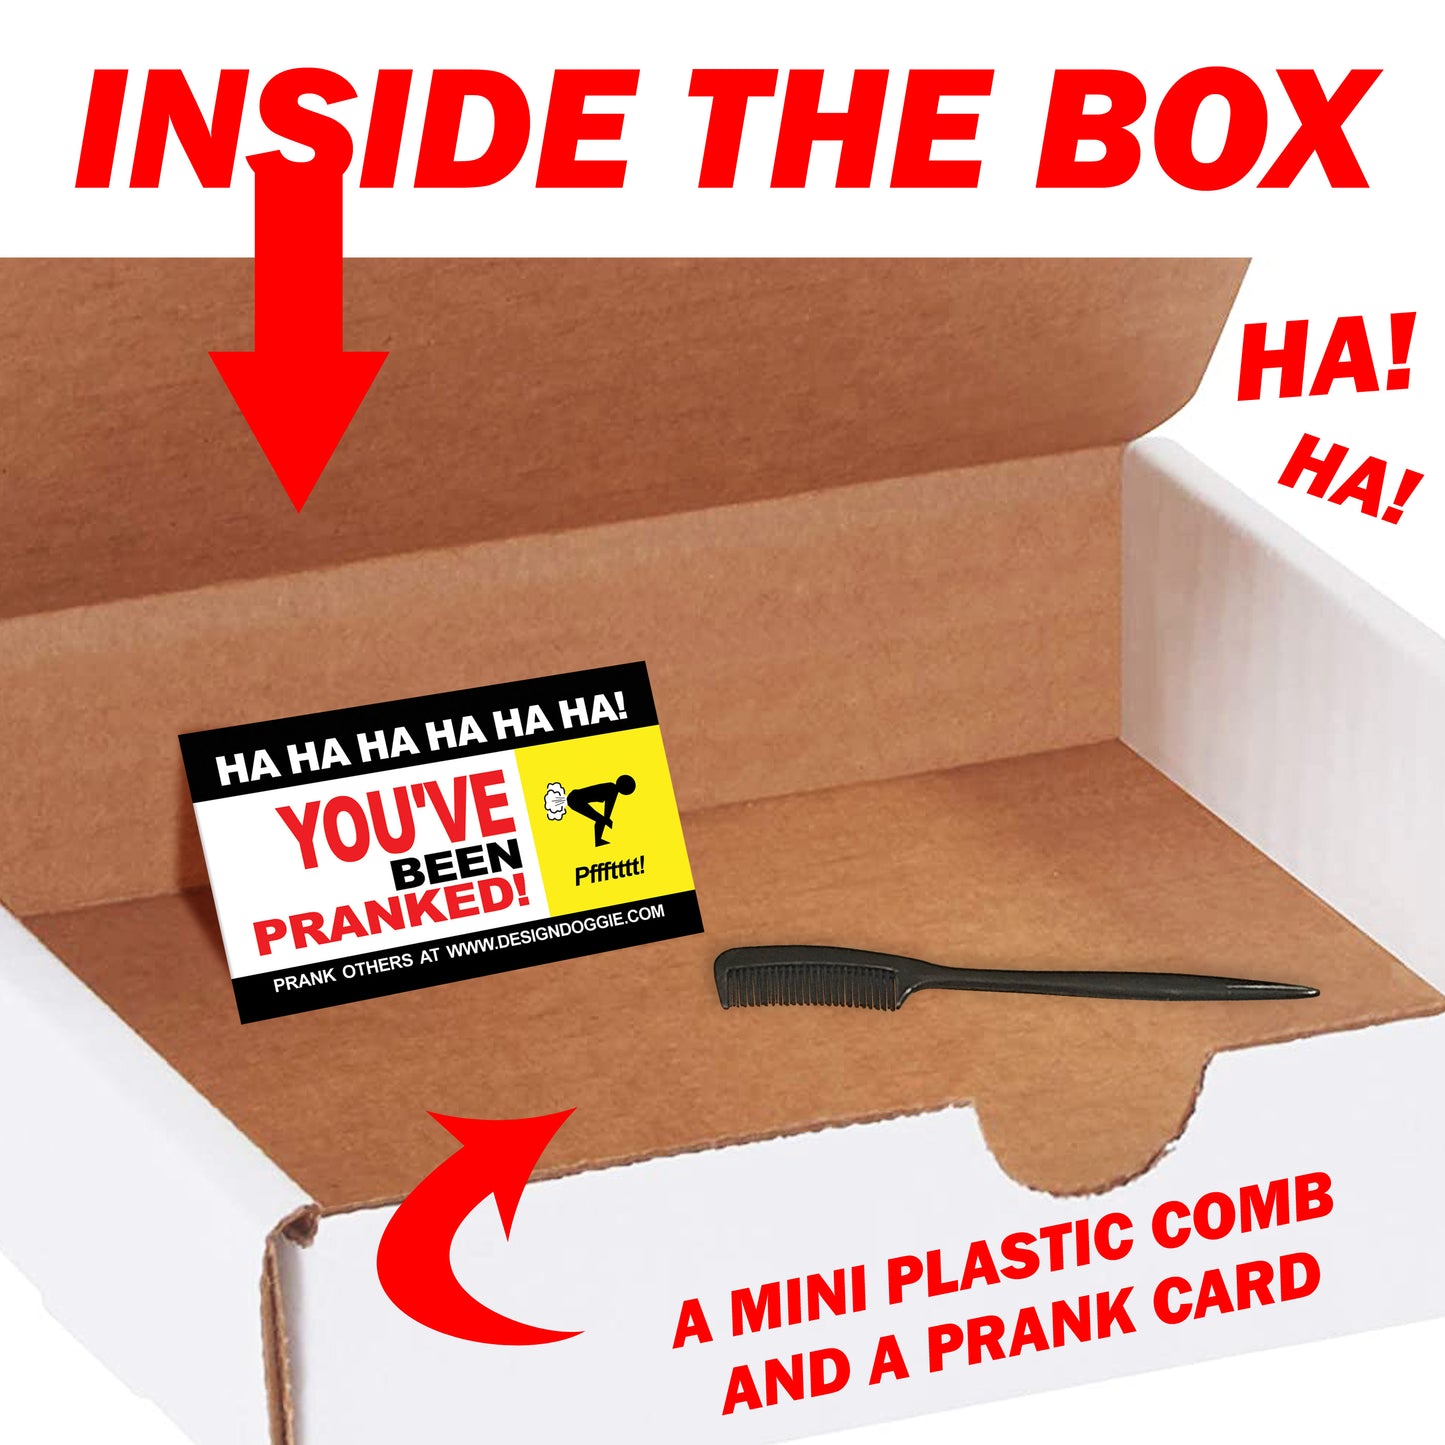 Pubic Lice Comb Joke Box